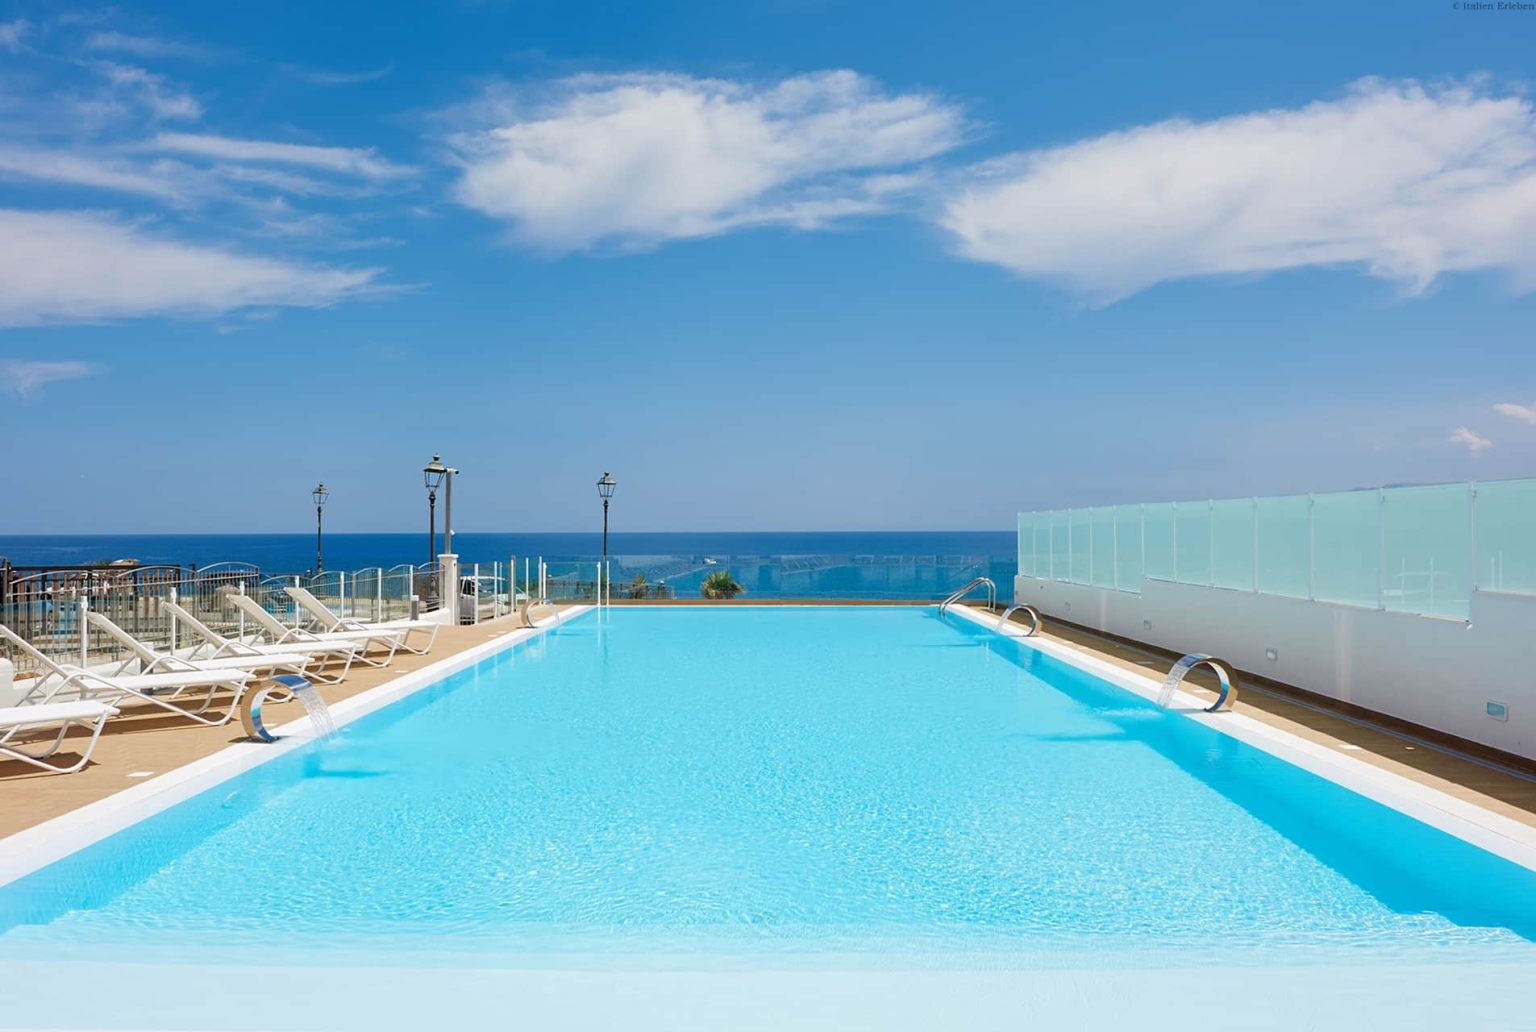 Sizilien West Marina di Petrolo Hotel Castellammare del Golfo Meer Panorama Pool Roof Top nahe Stadt Familien frisch schlicht modern